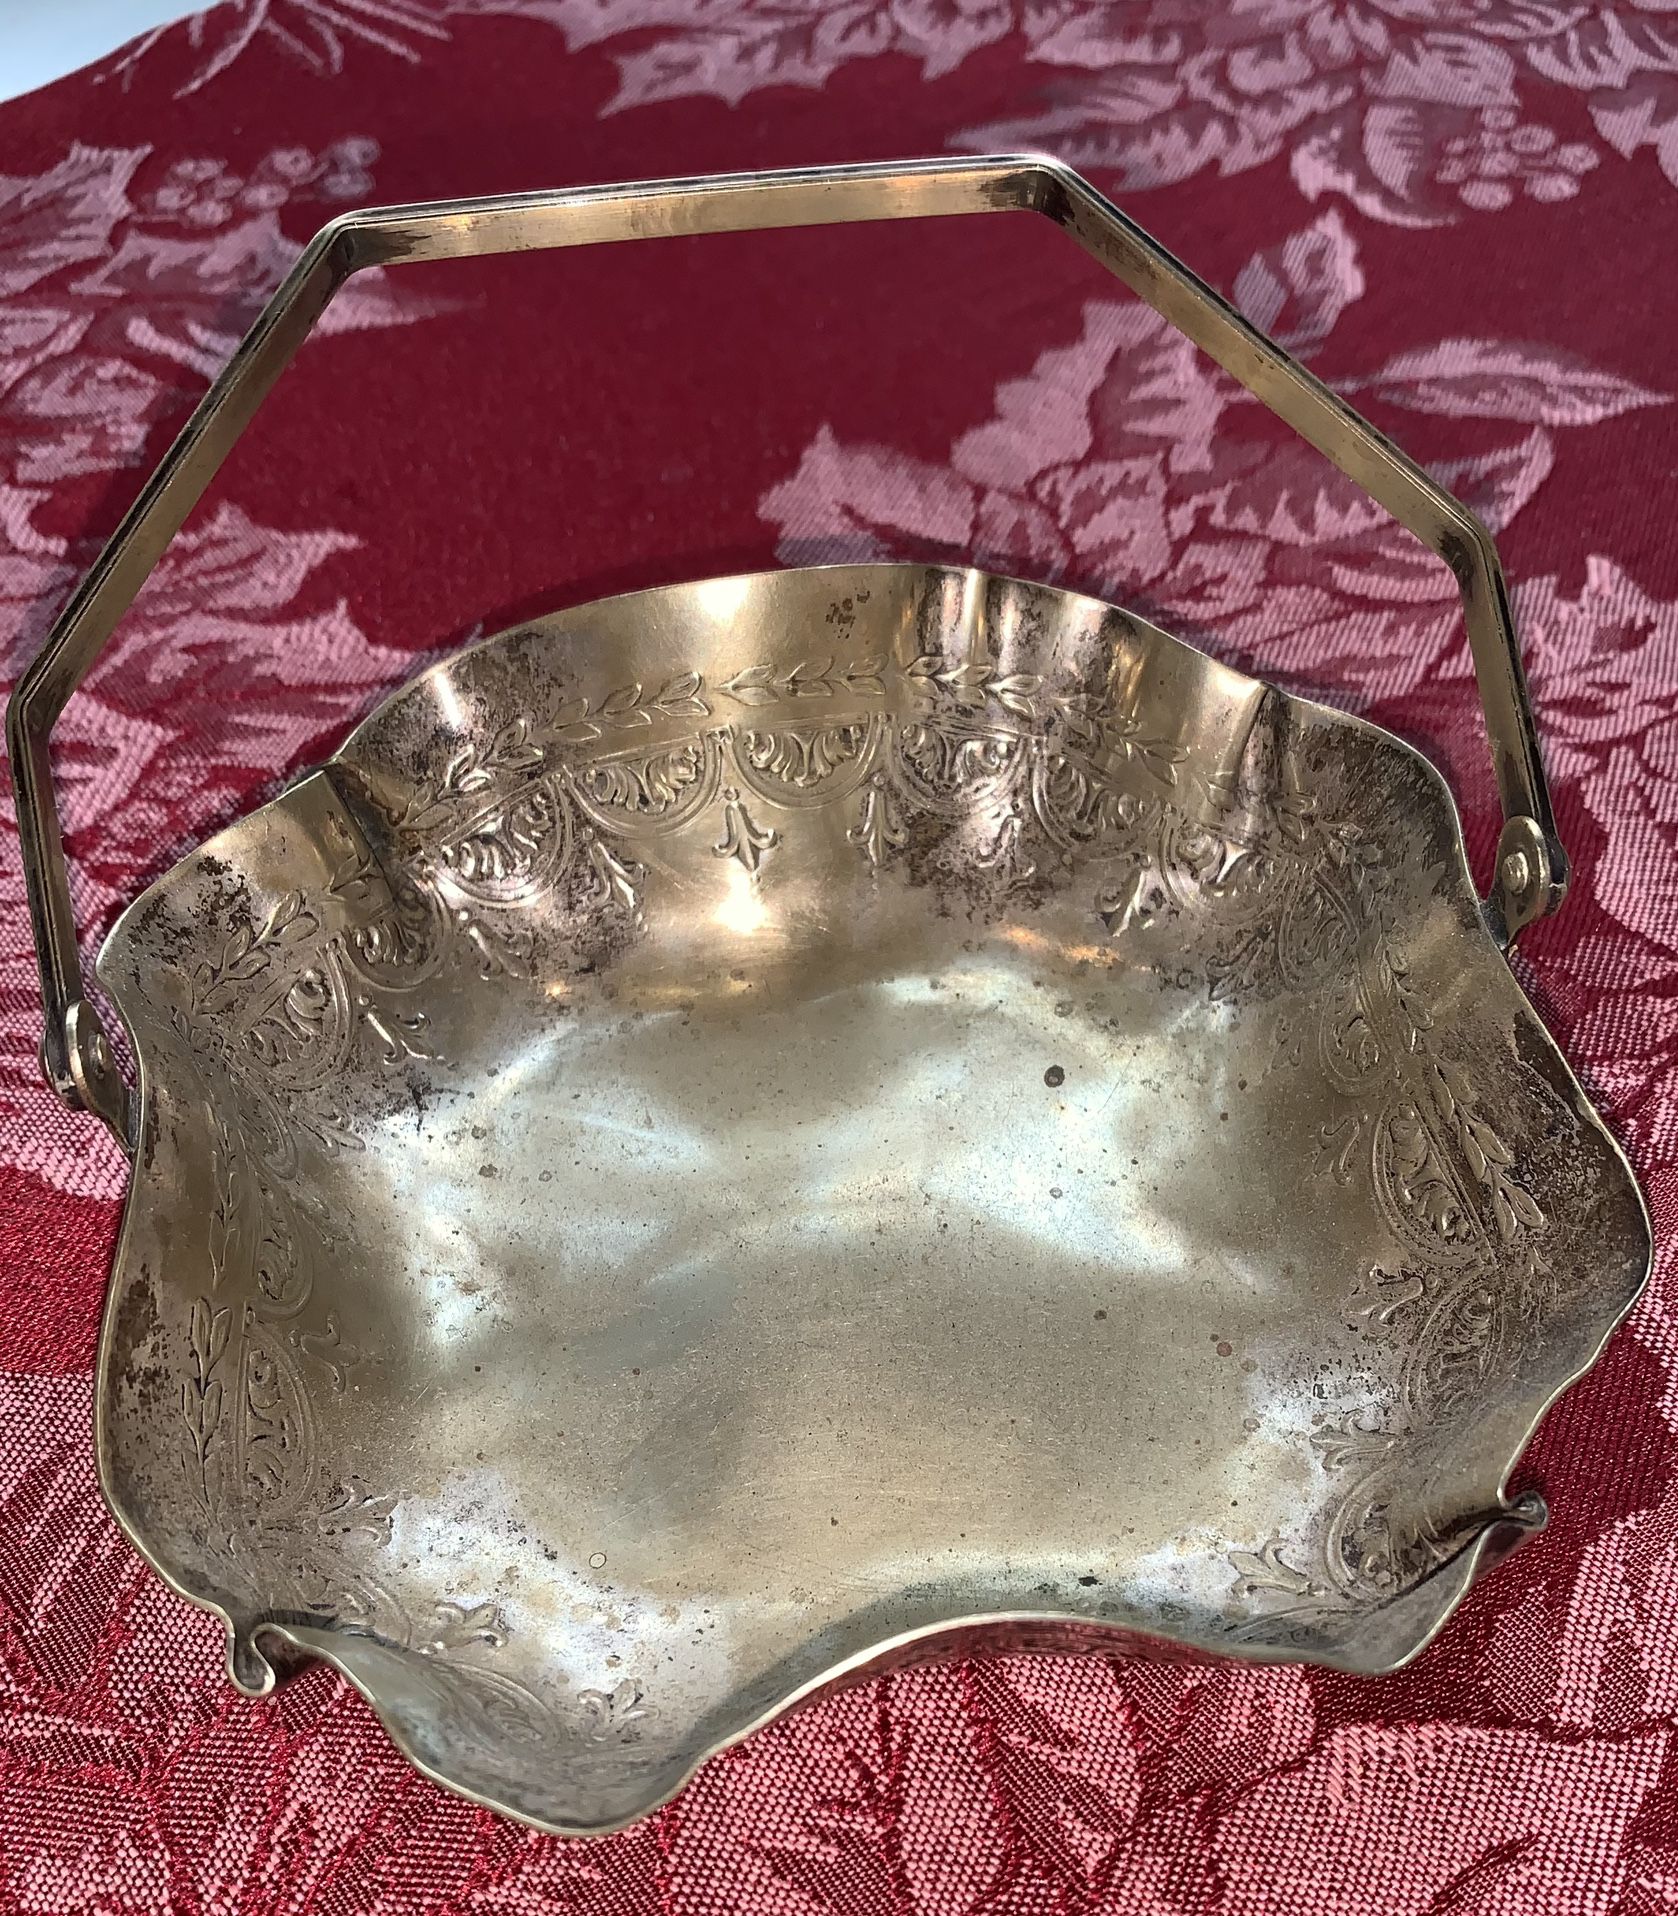 Bernard Rice's Sons 5041 Apollo hammered silverplate basket handled bowl